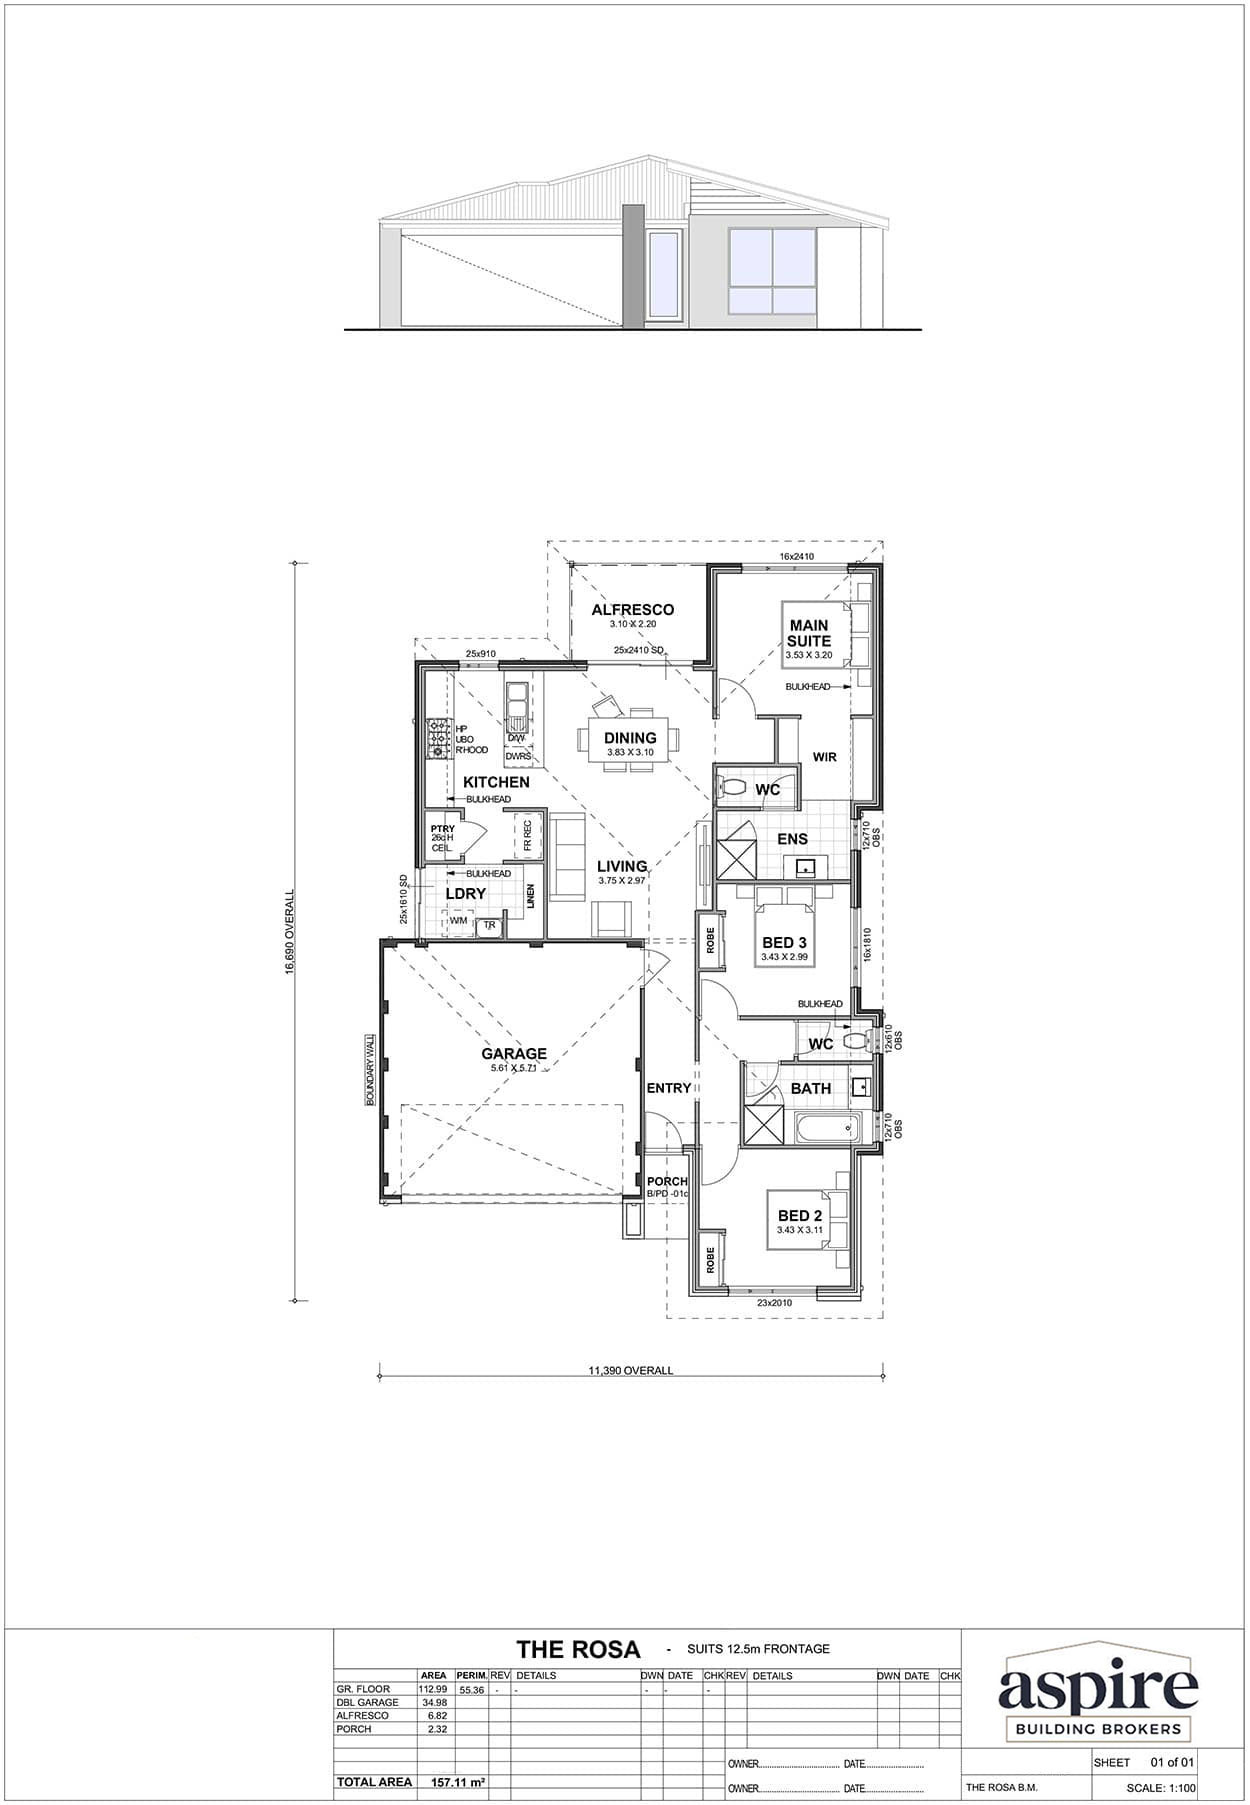 The Rosa Floor Plan - Perth New Build Home Designs. 3 Bedrooms and 12.5m Block Width. Aspire Building Brokers